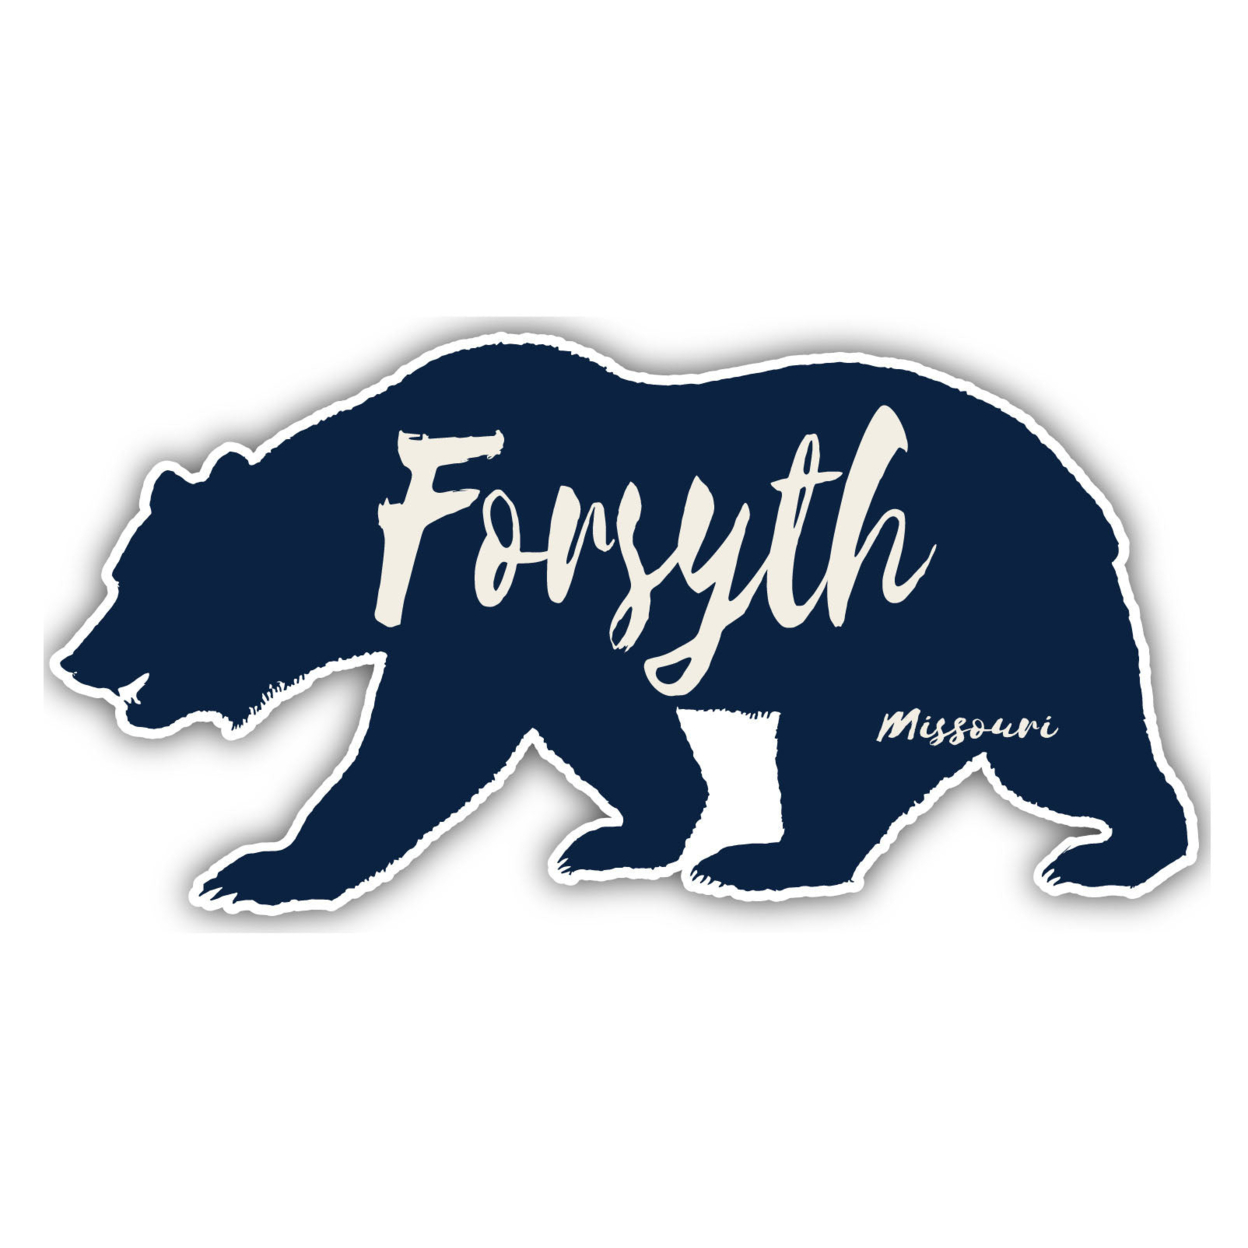 Forsyth Missouri Souvenir Decorative Stickers (Choose Theme And Size) - 4-Pack, 8-Inch, Bear